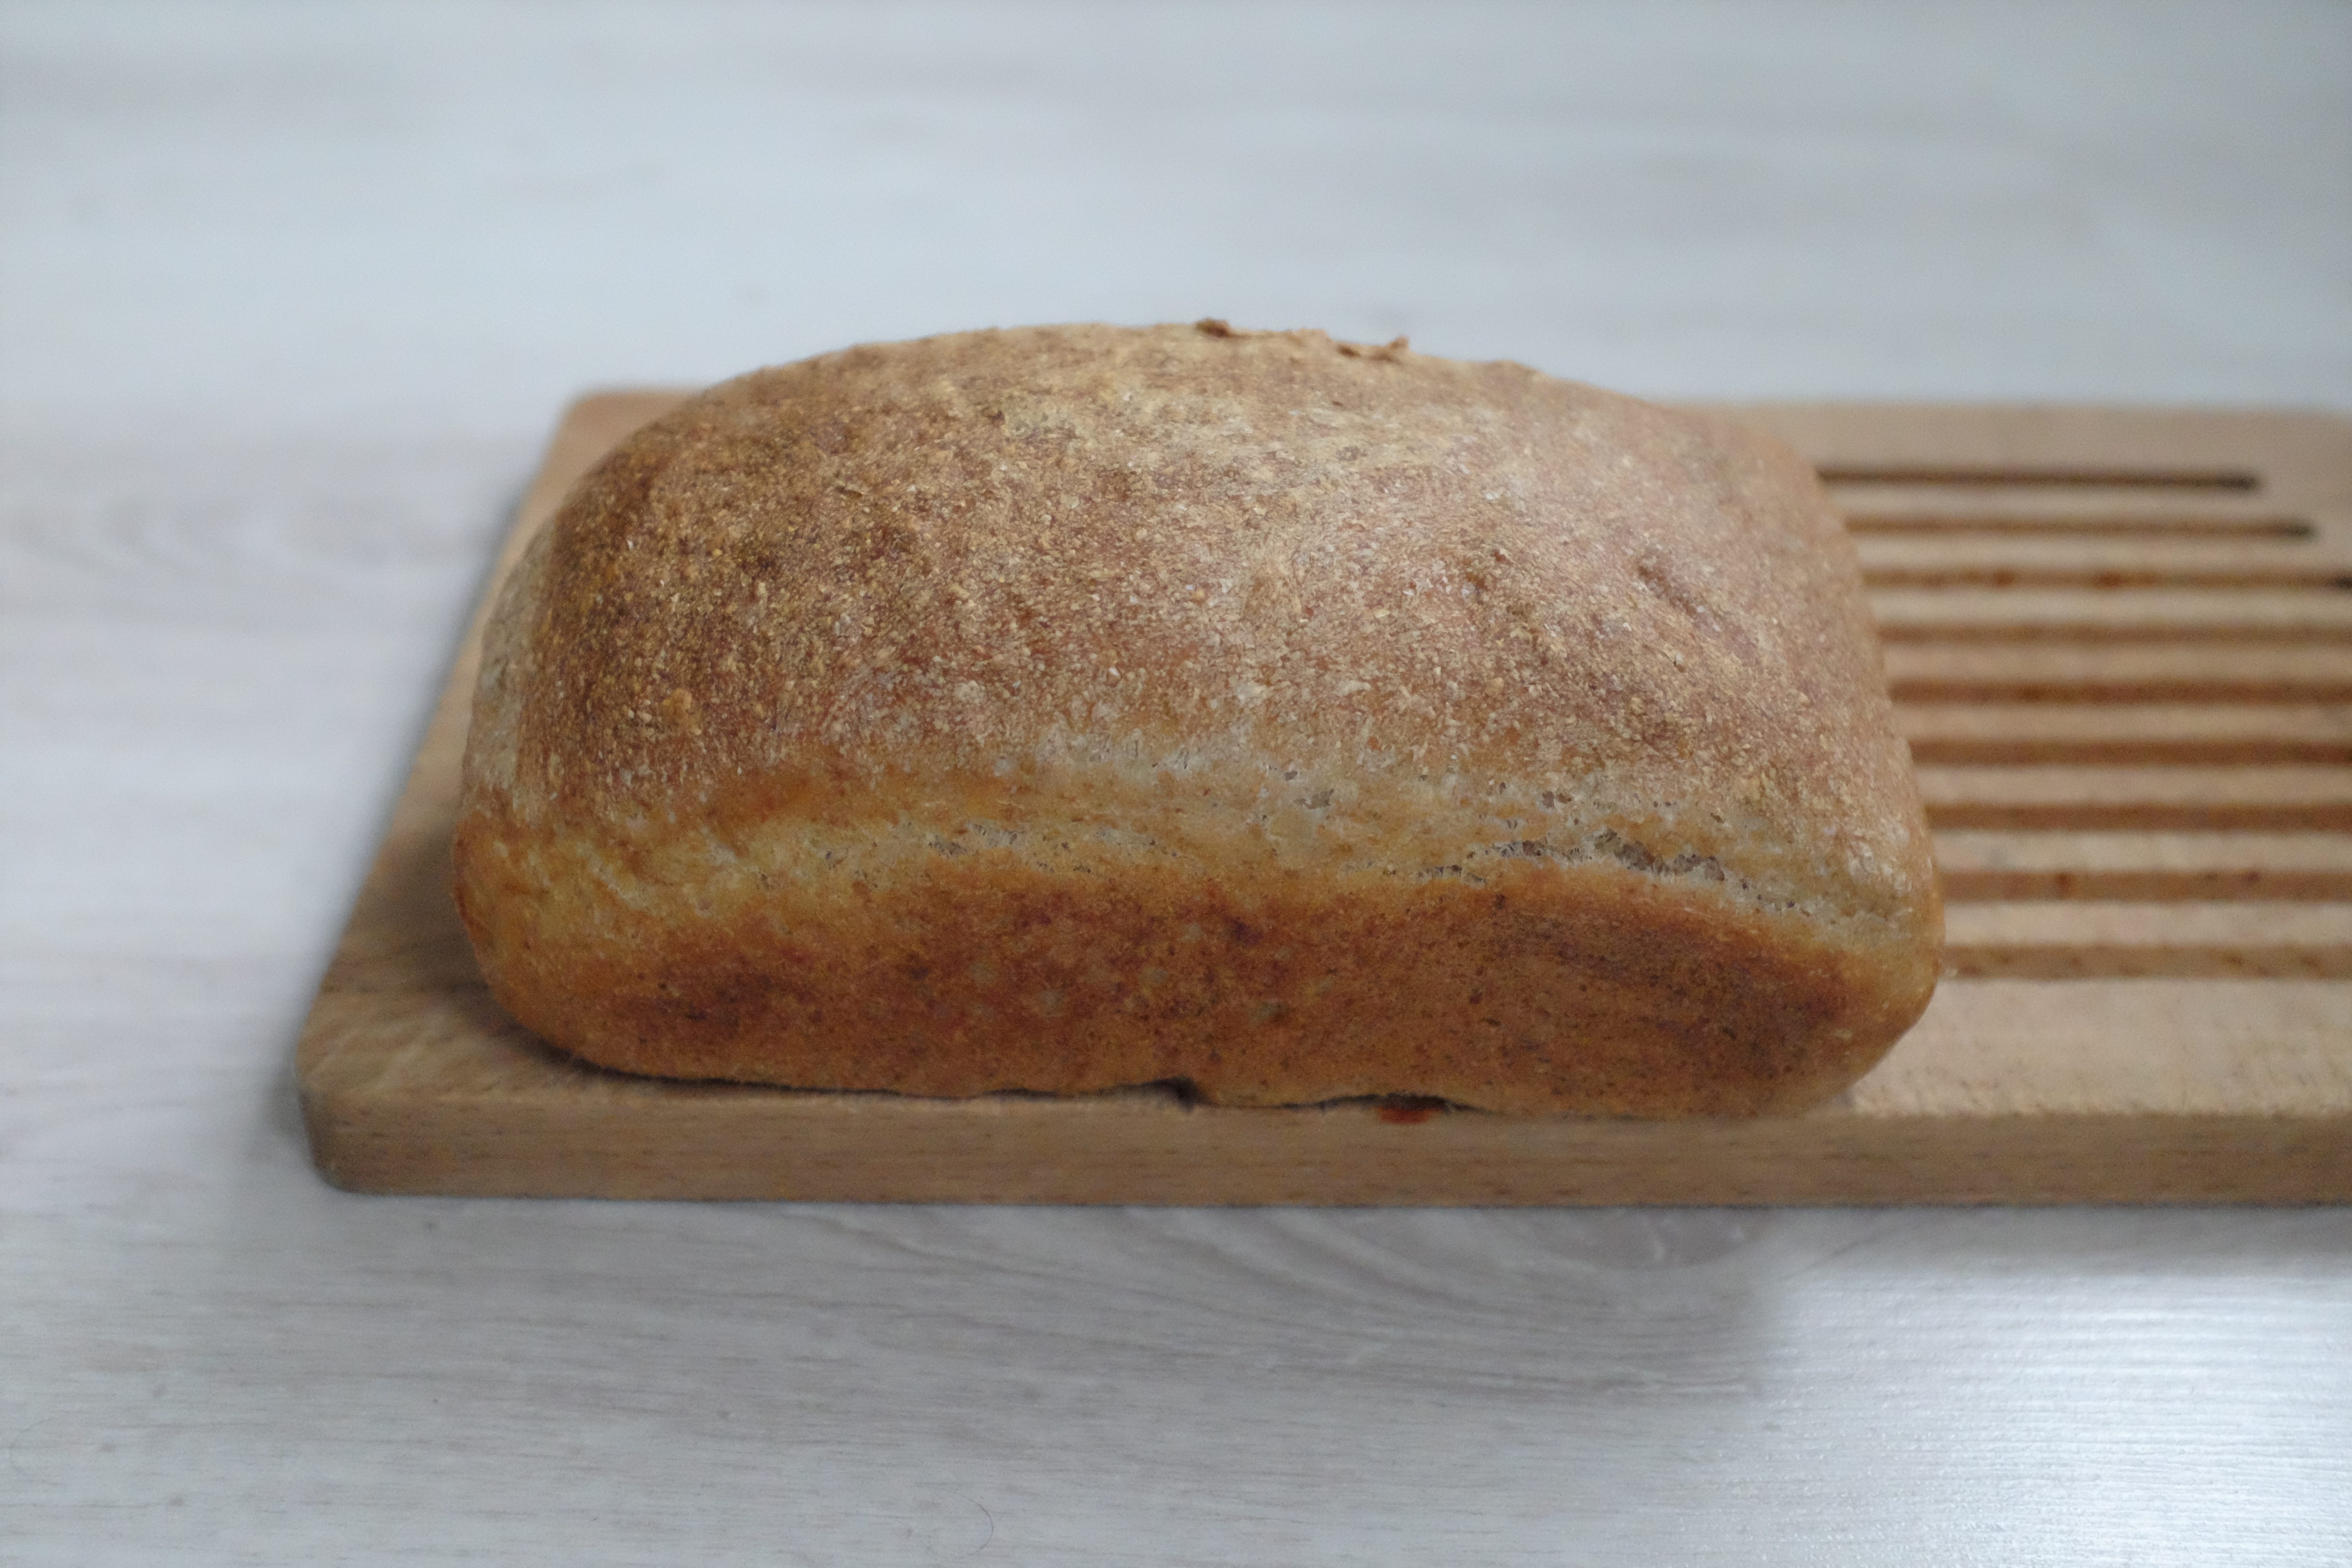 An image of a bread called “Hartog Mini-Sourdough”